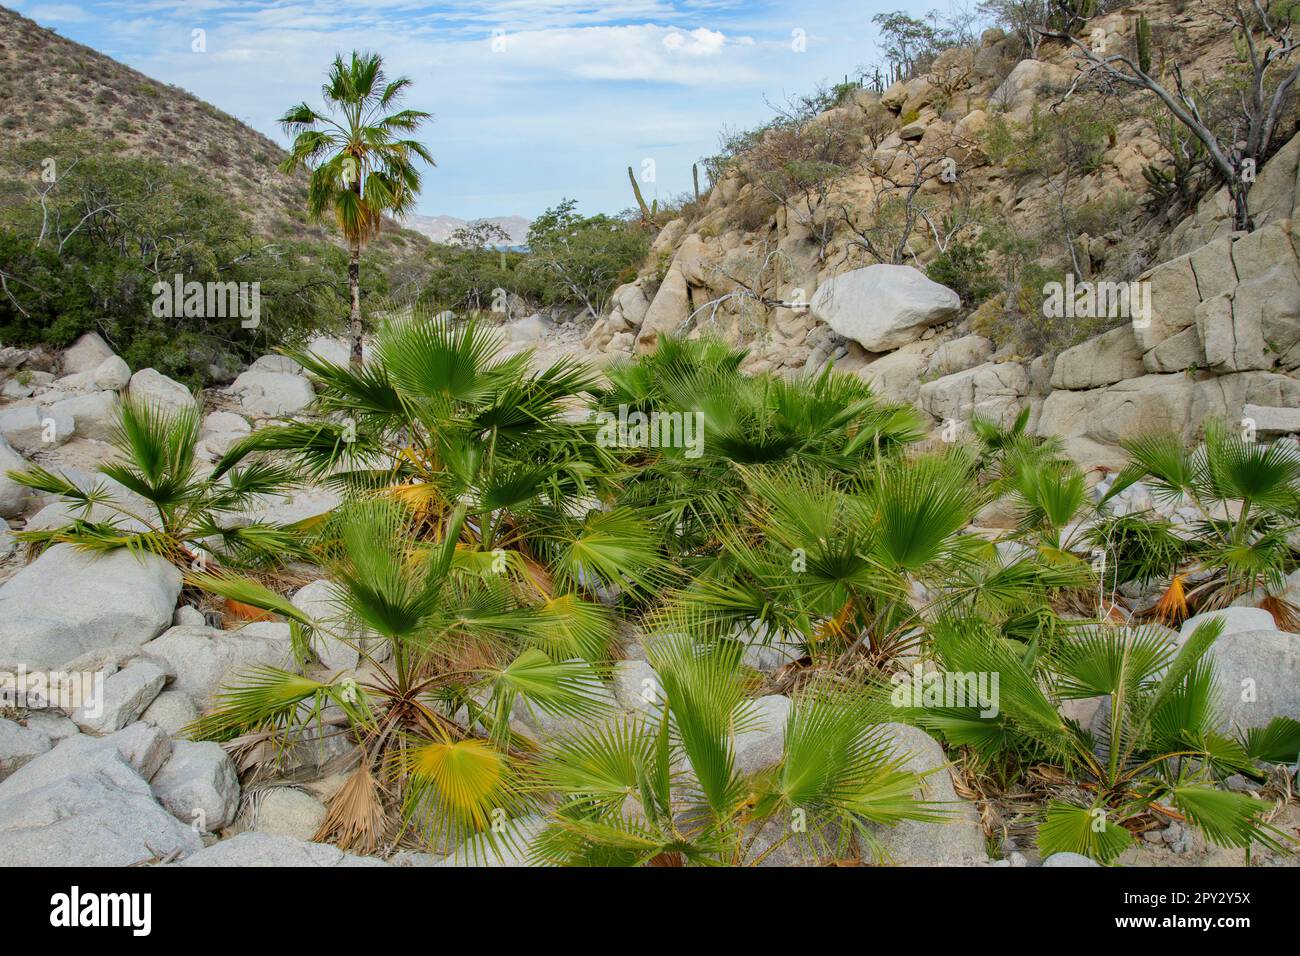 Mexico, Baja California, Sur, El Sargento, Arroyo, palm oasis Stock Photo